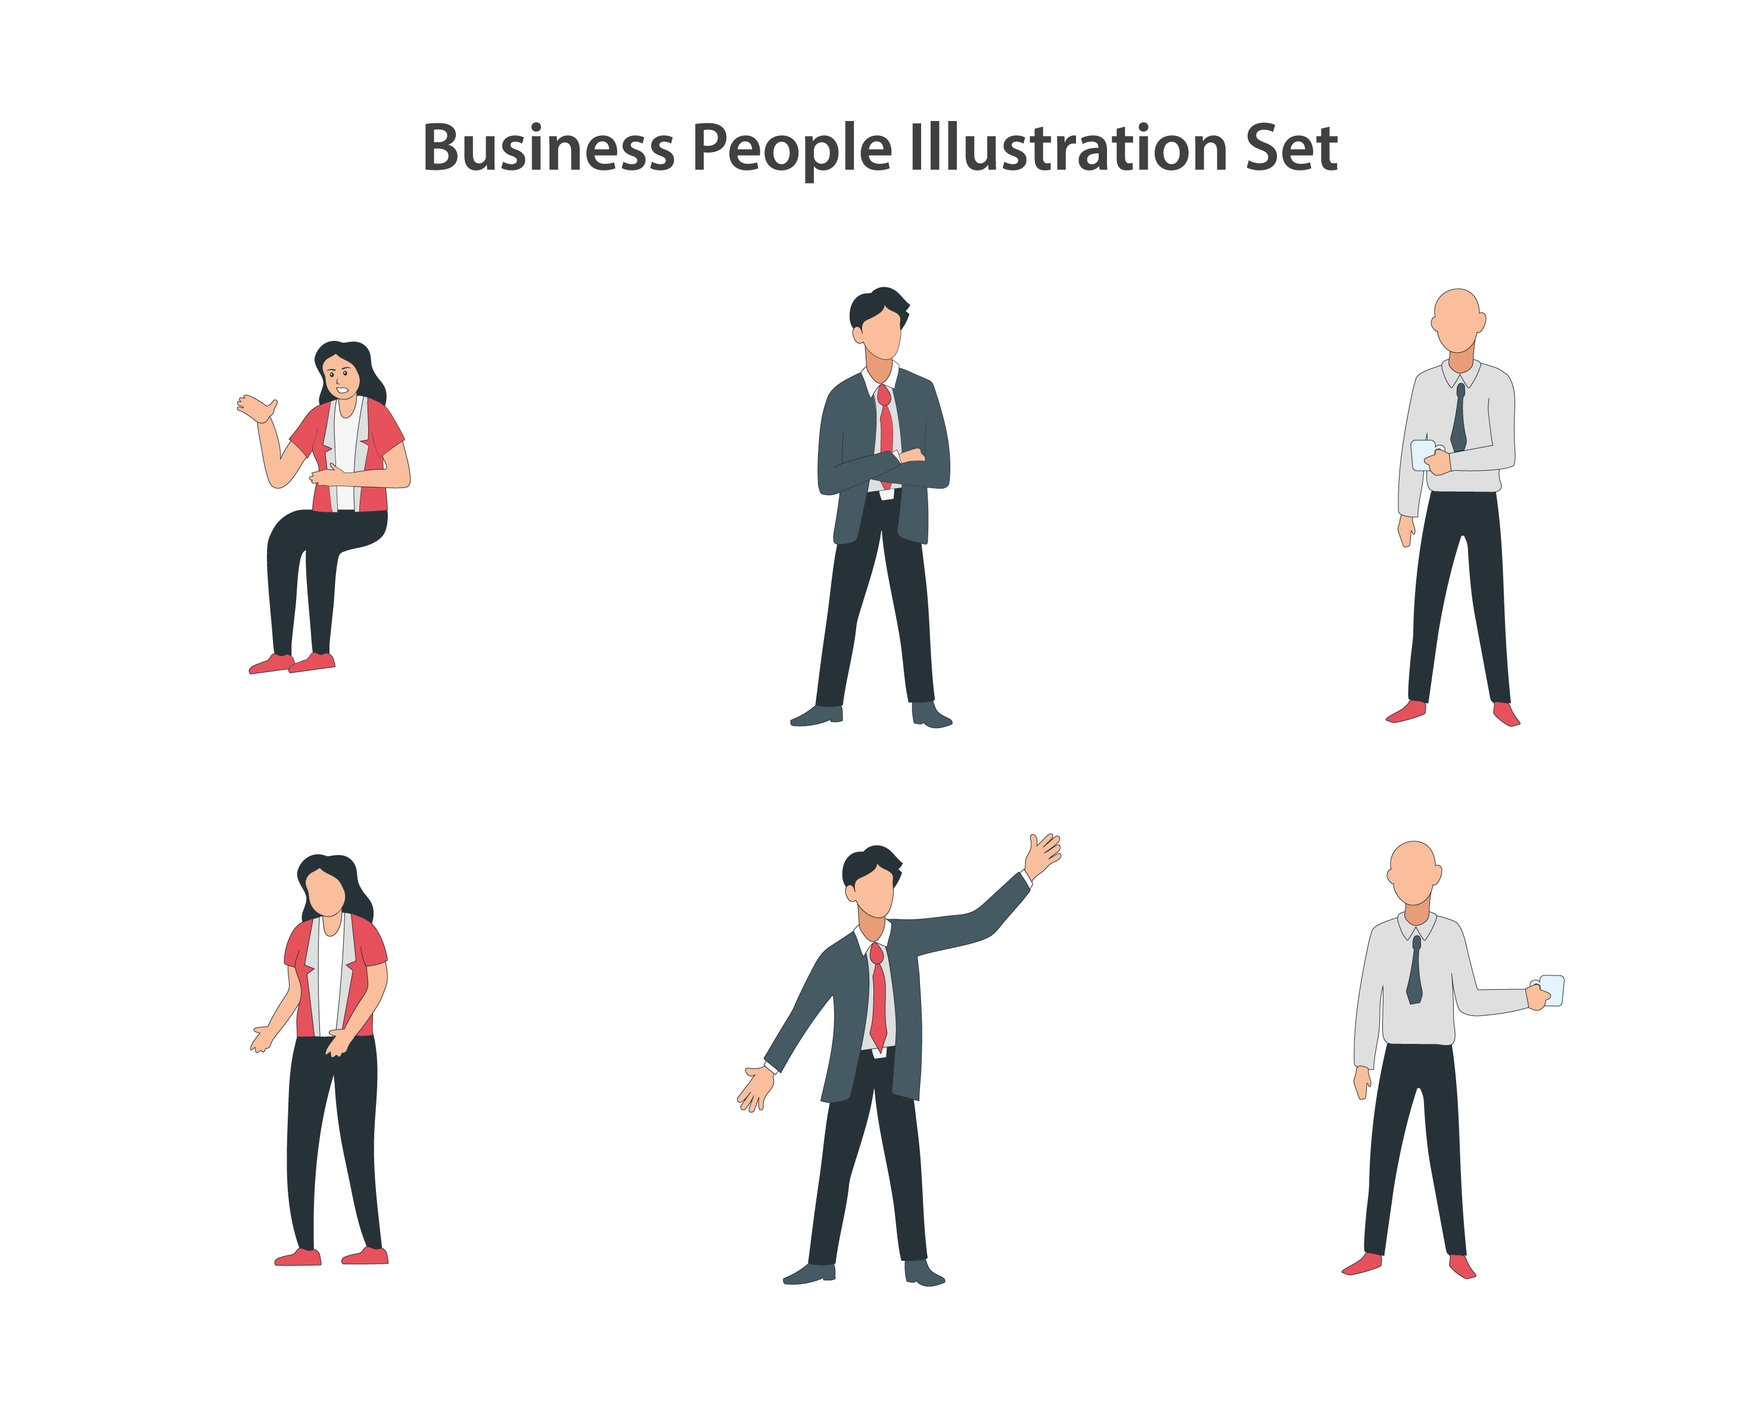 Free Business People Story Set in Illustrator, EPS, SVG, JPG, PNG